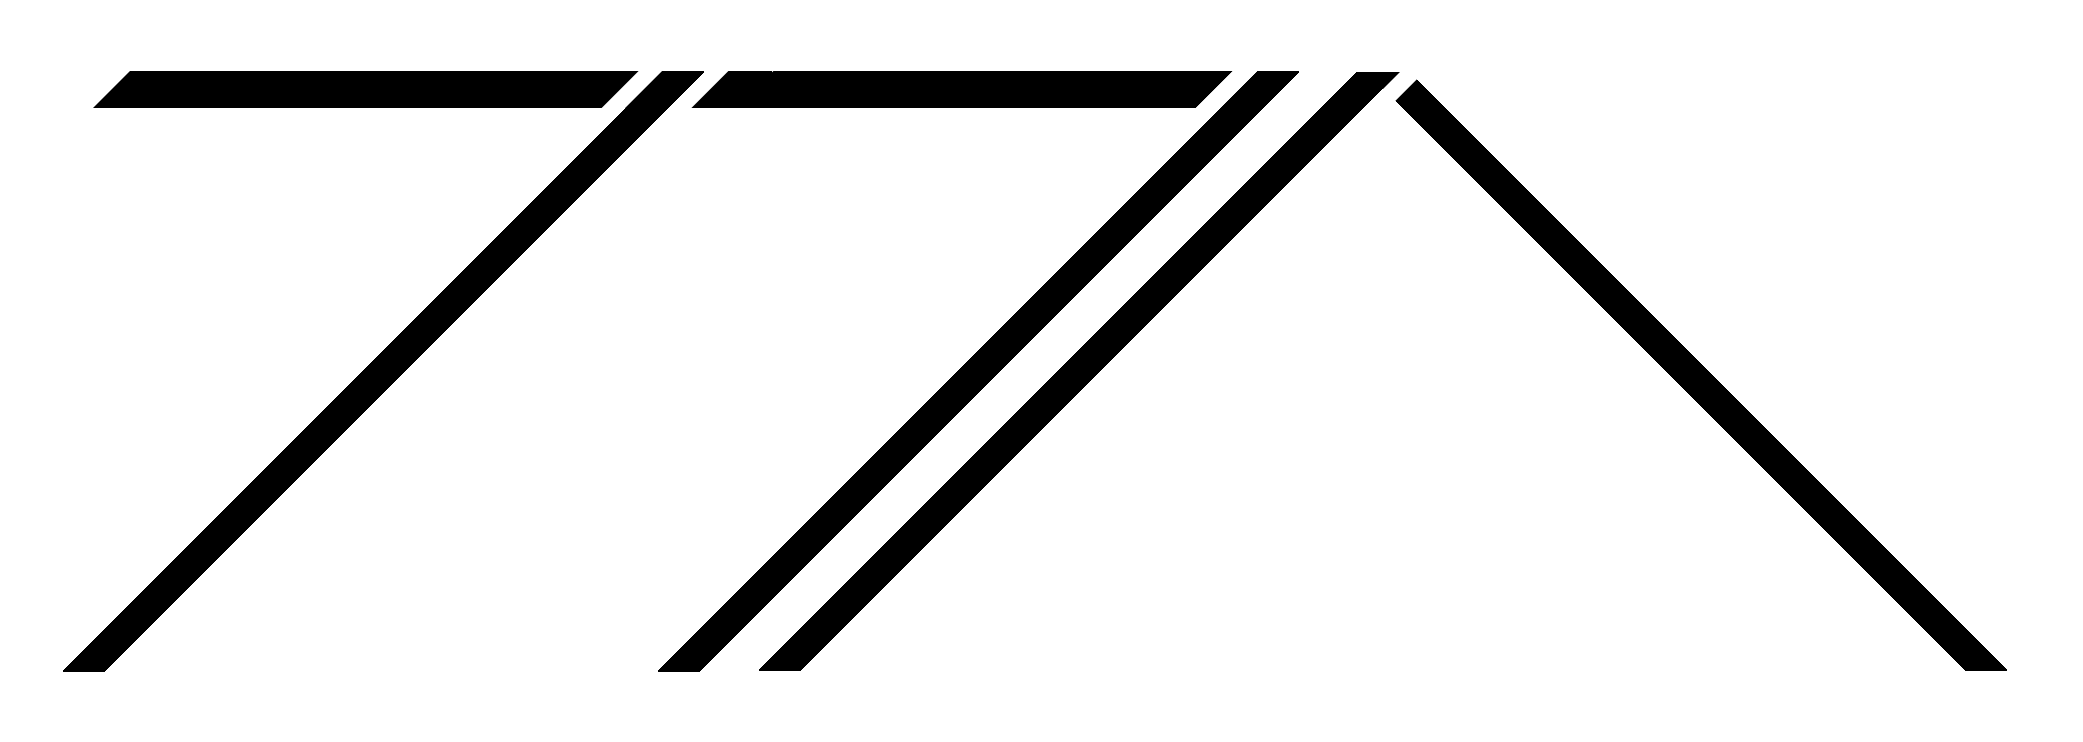 77Arch